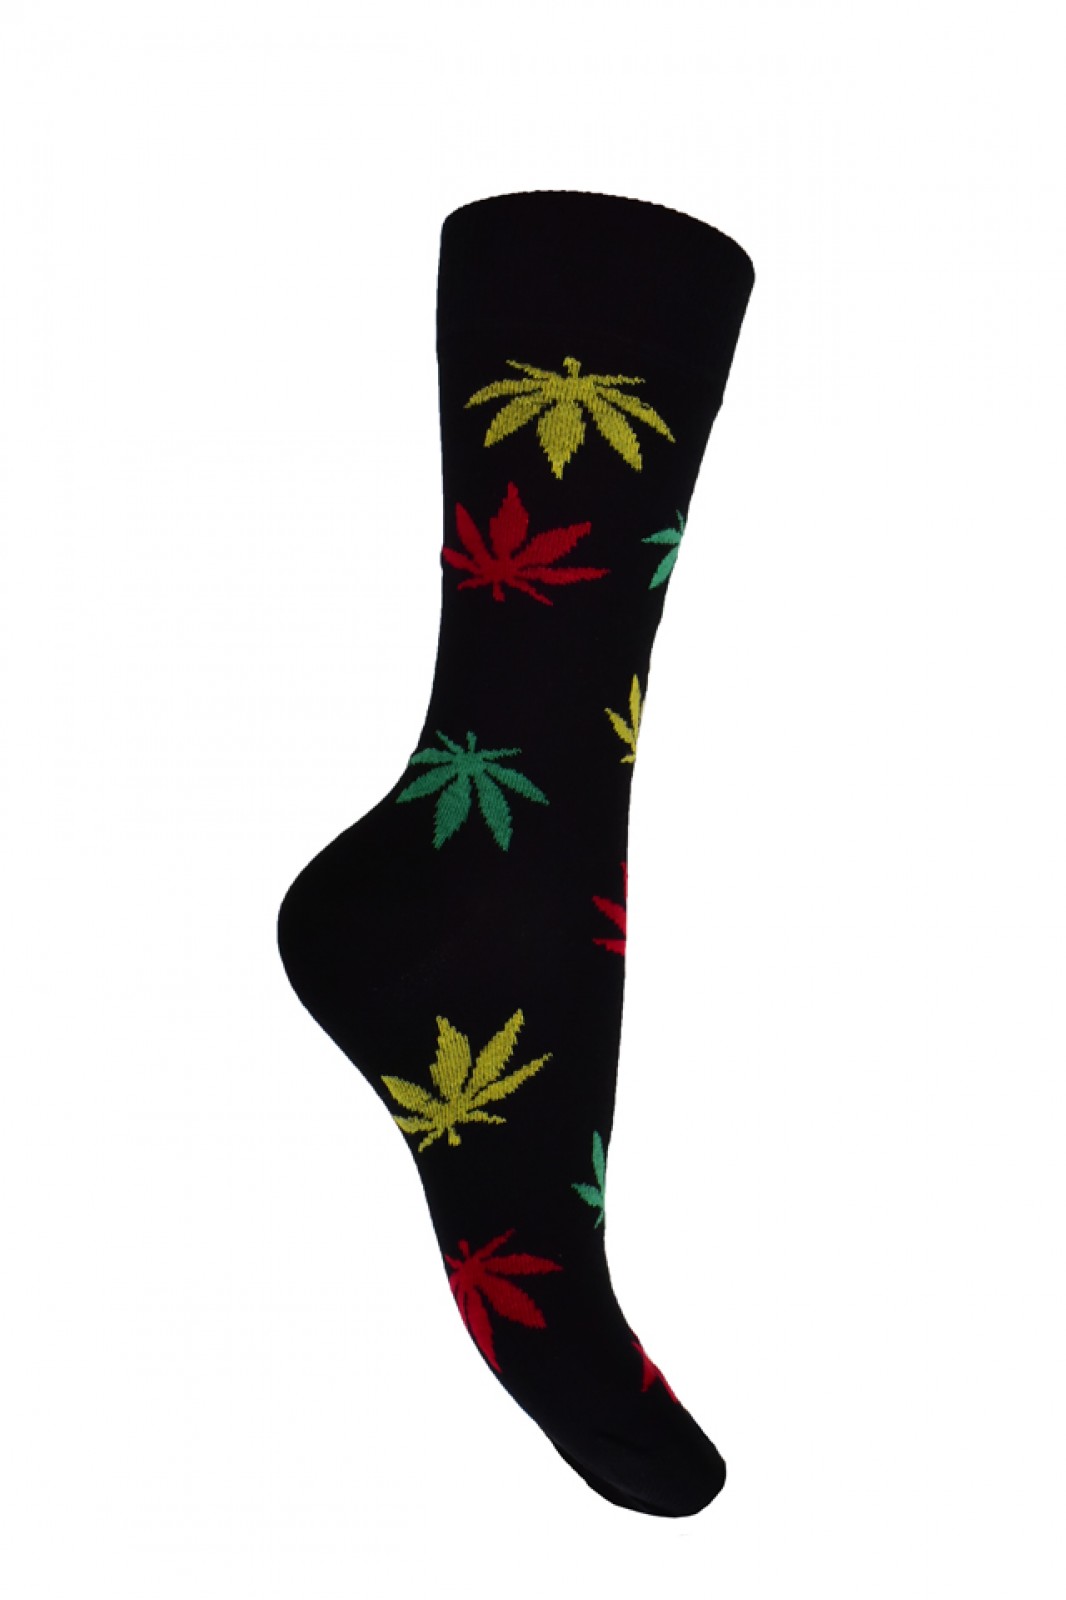 DOUROS Design TETRIS socks (3 pairs)